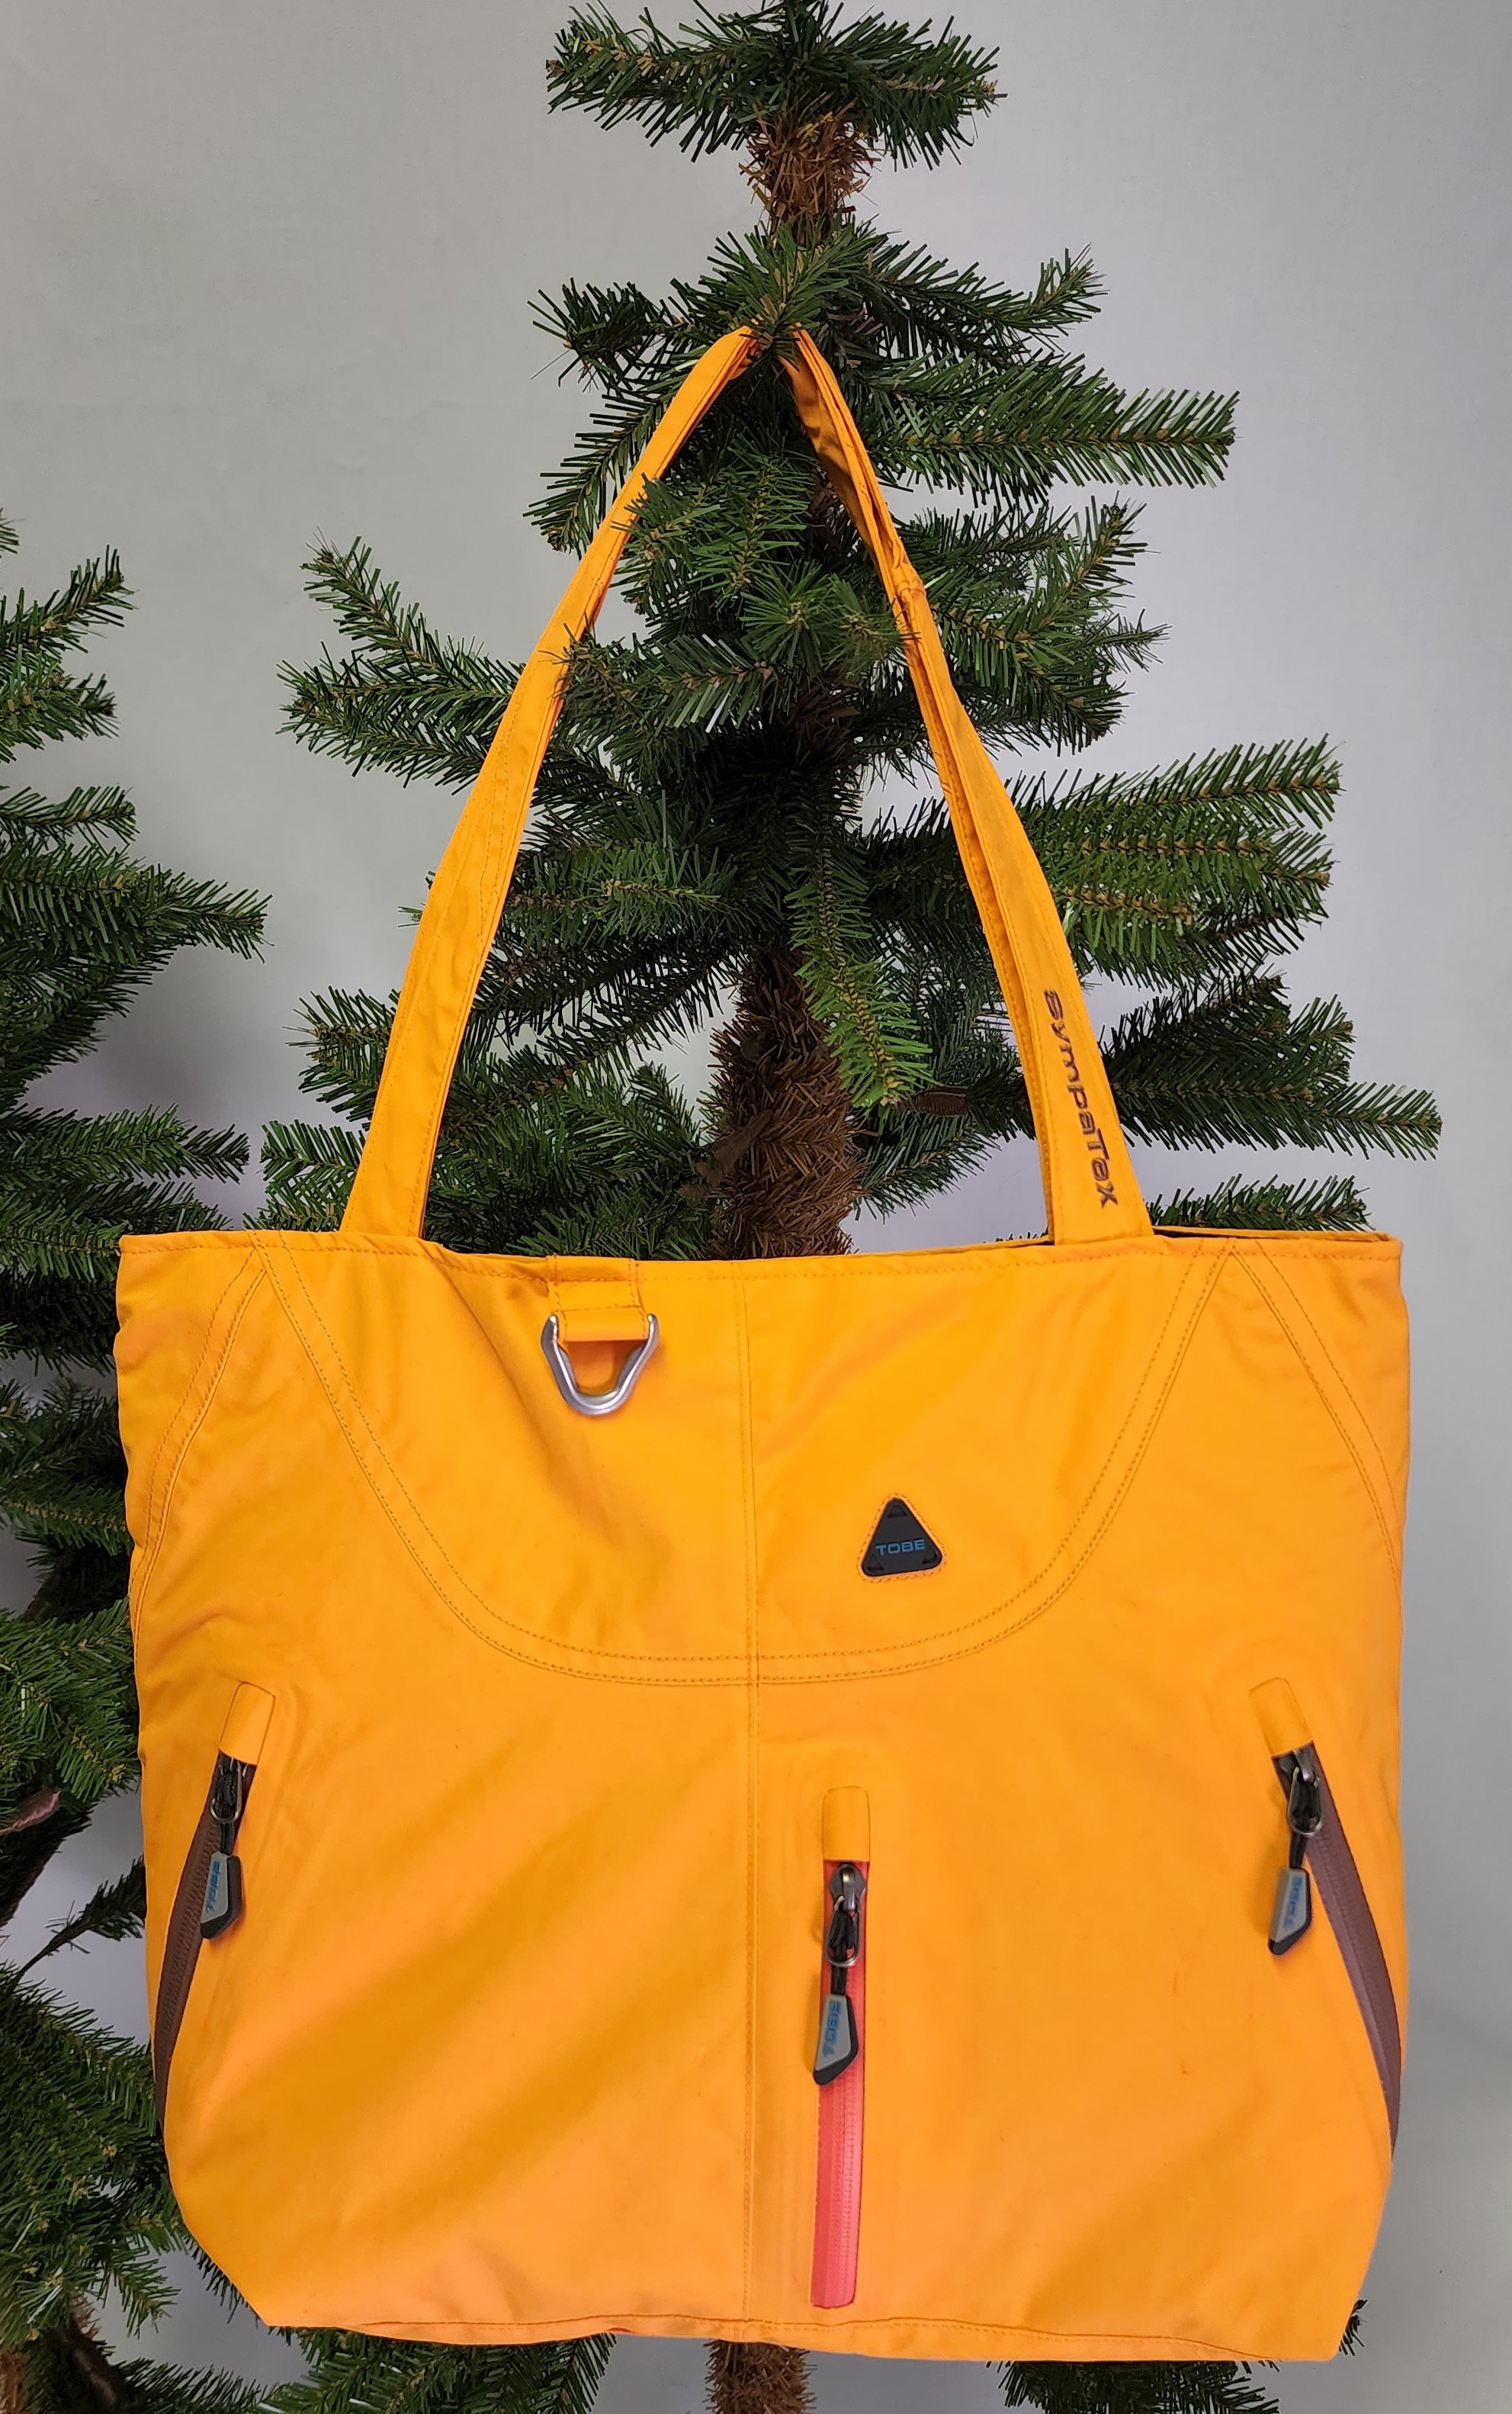 upcycled yellow tobe handbag